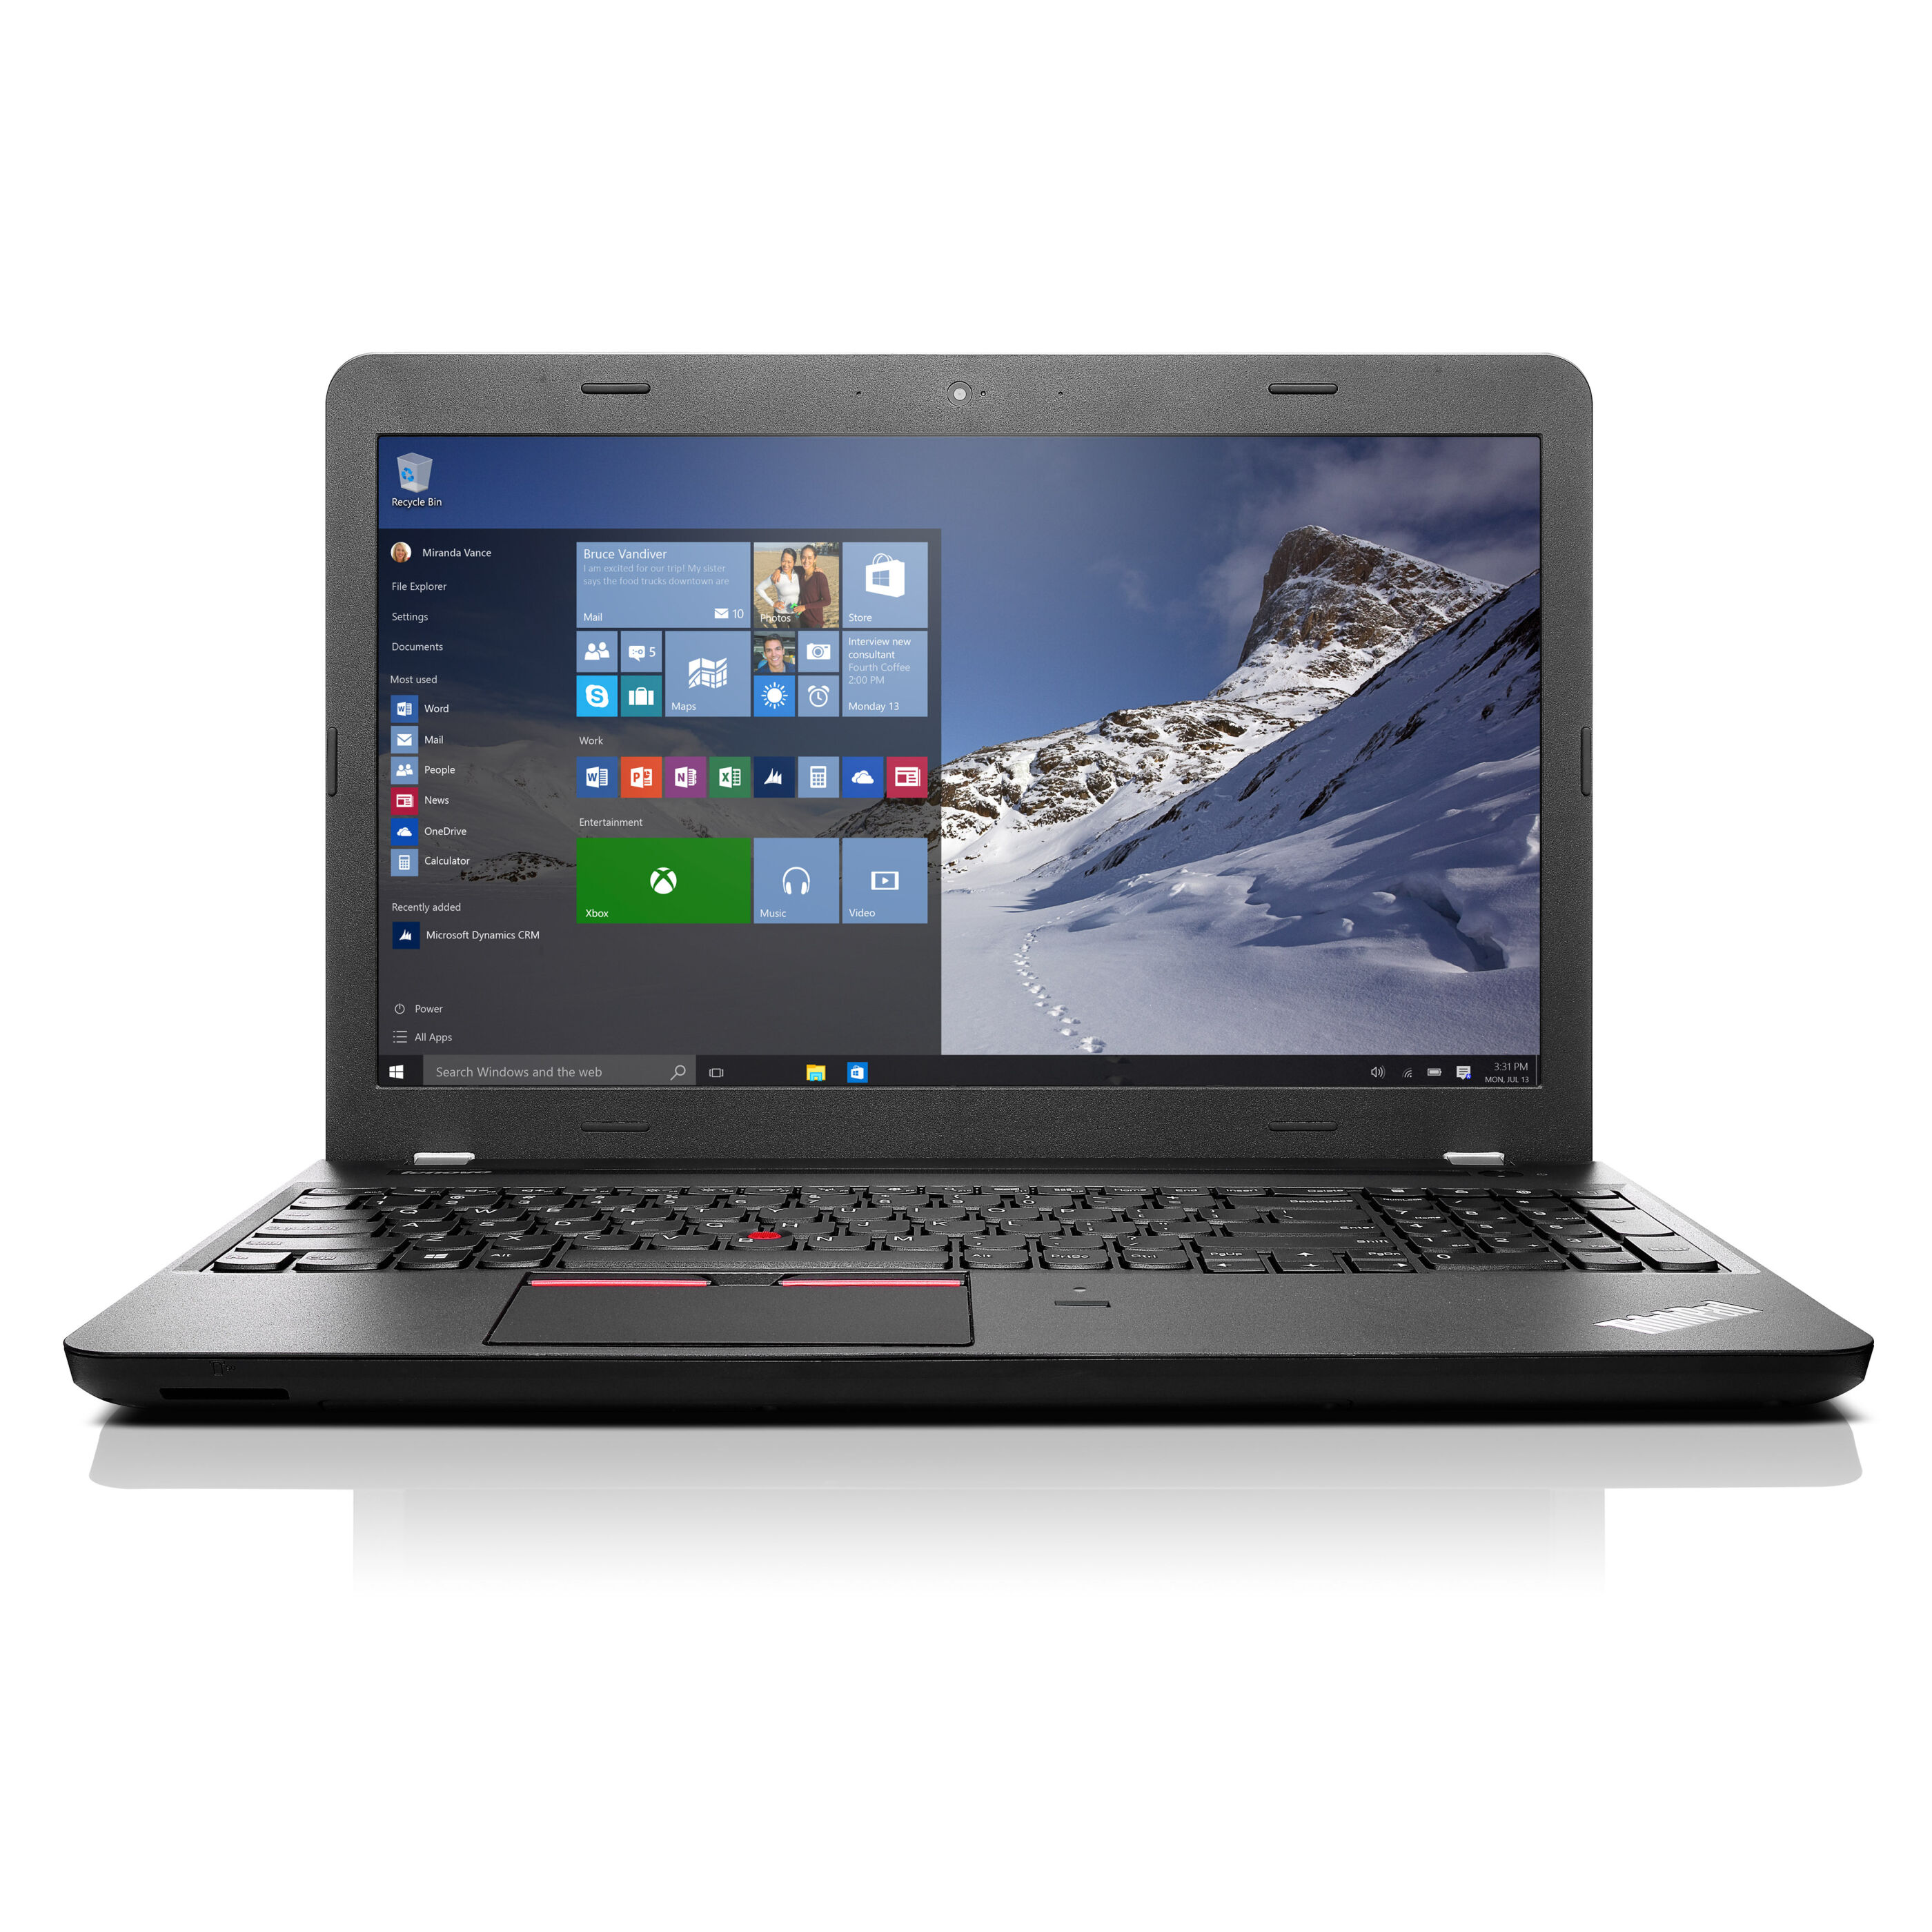 Laptop Lenovo ThinkPad E560, Intel Core i5-6200U 2.30GHz, 8GB DDR4, 120GB SSD, DVD-RW, 15 Inch, Tastatura Numerica